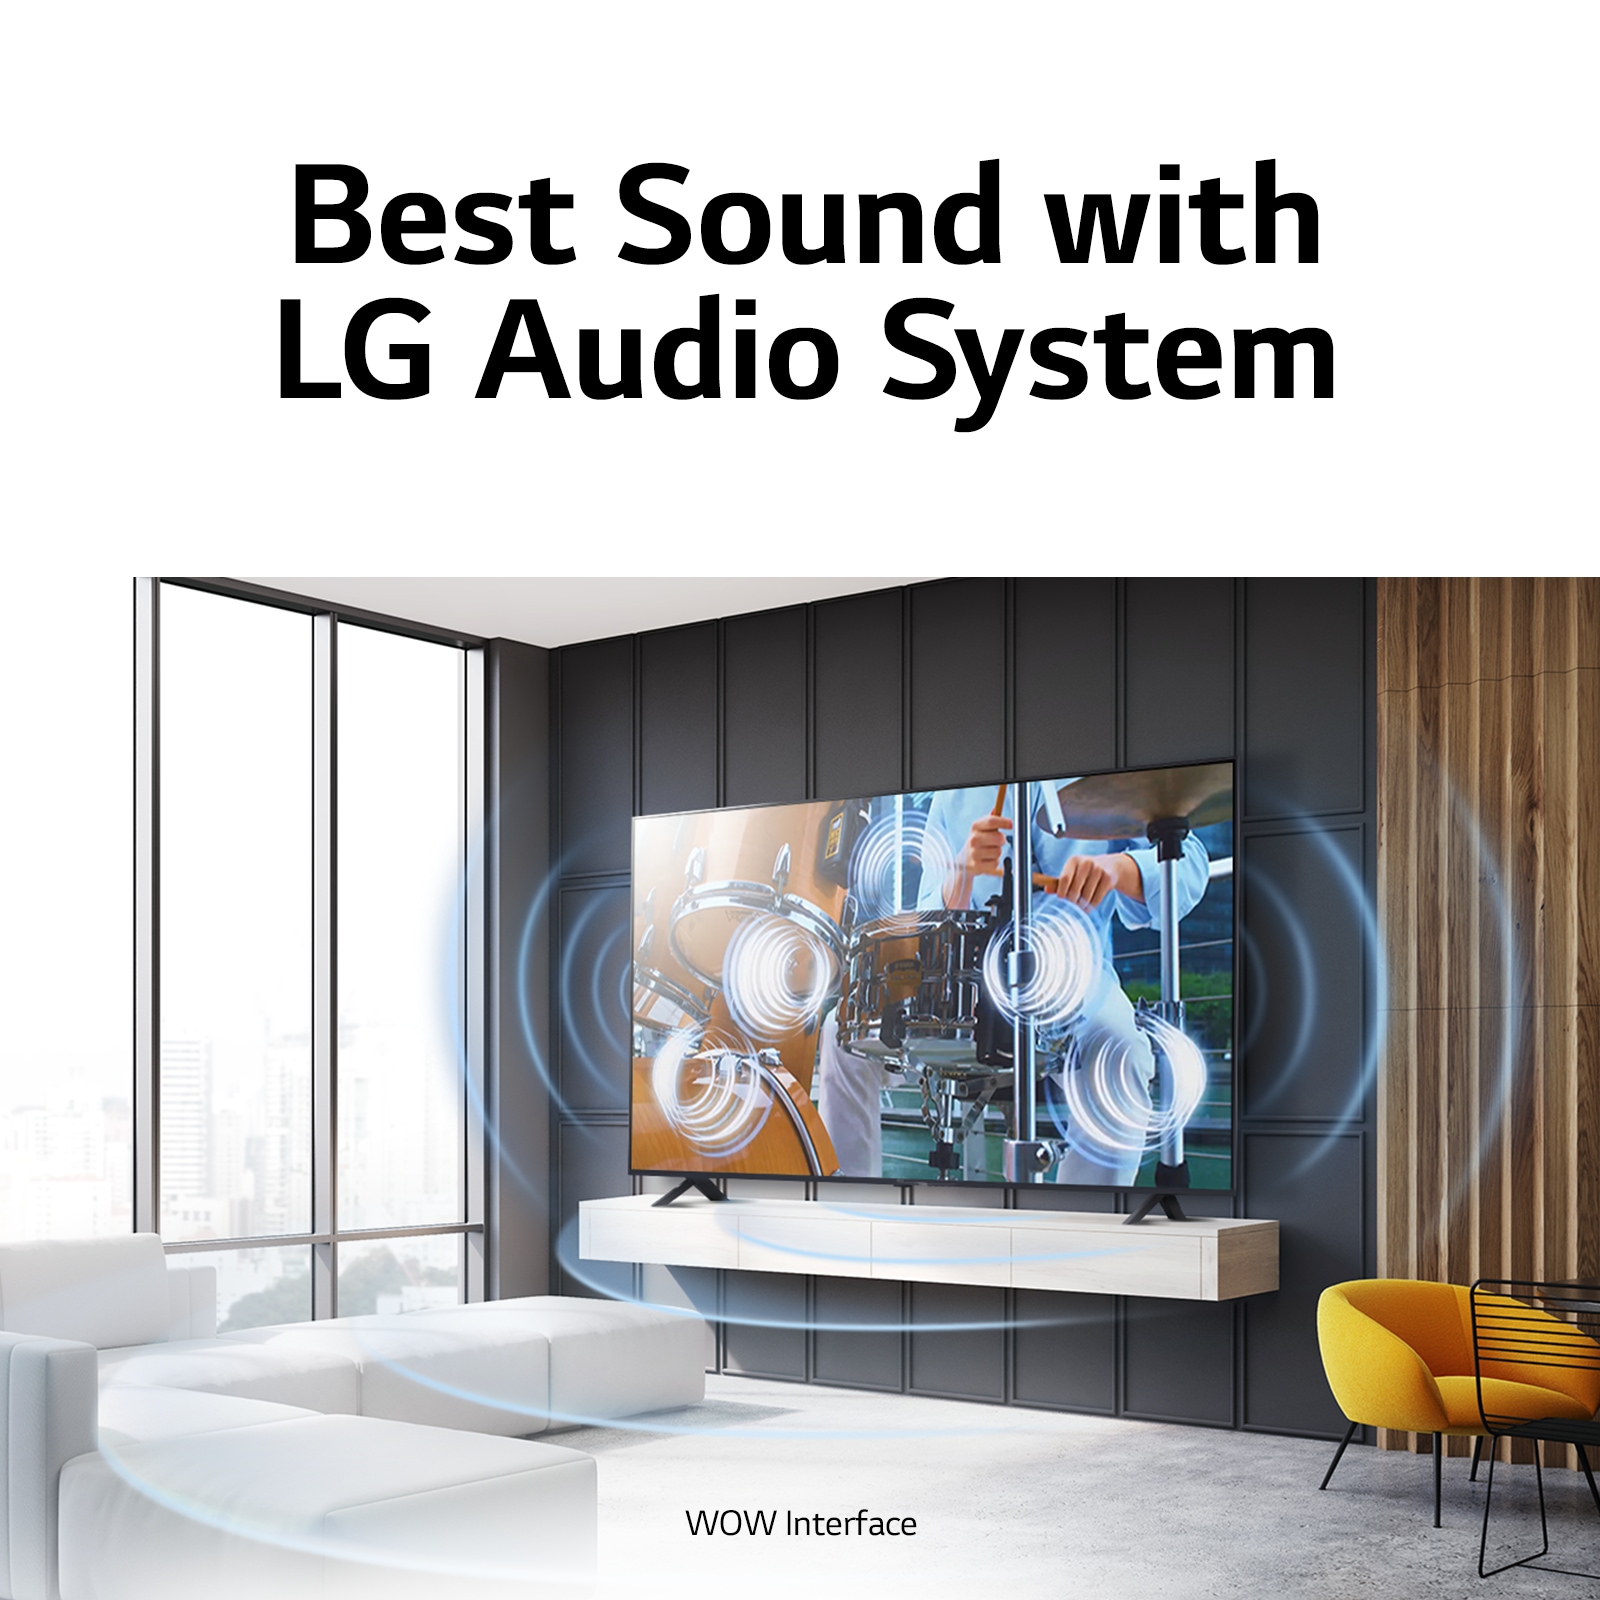 LG Audio System